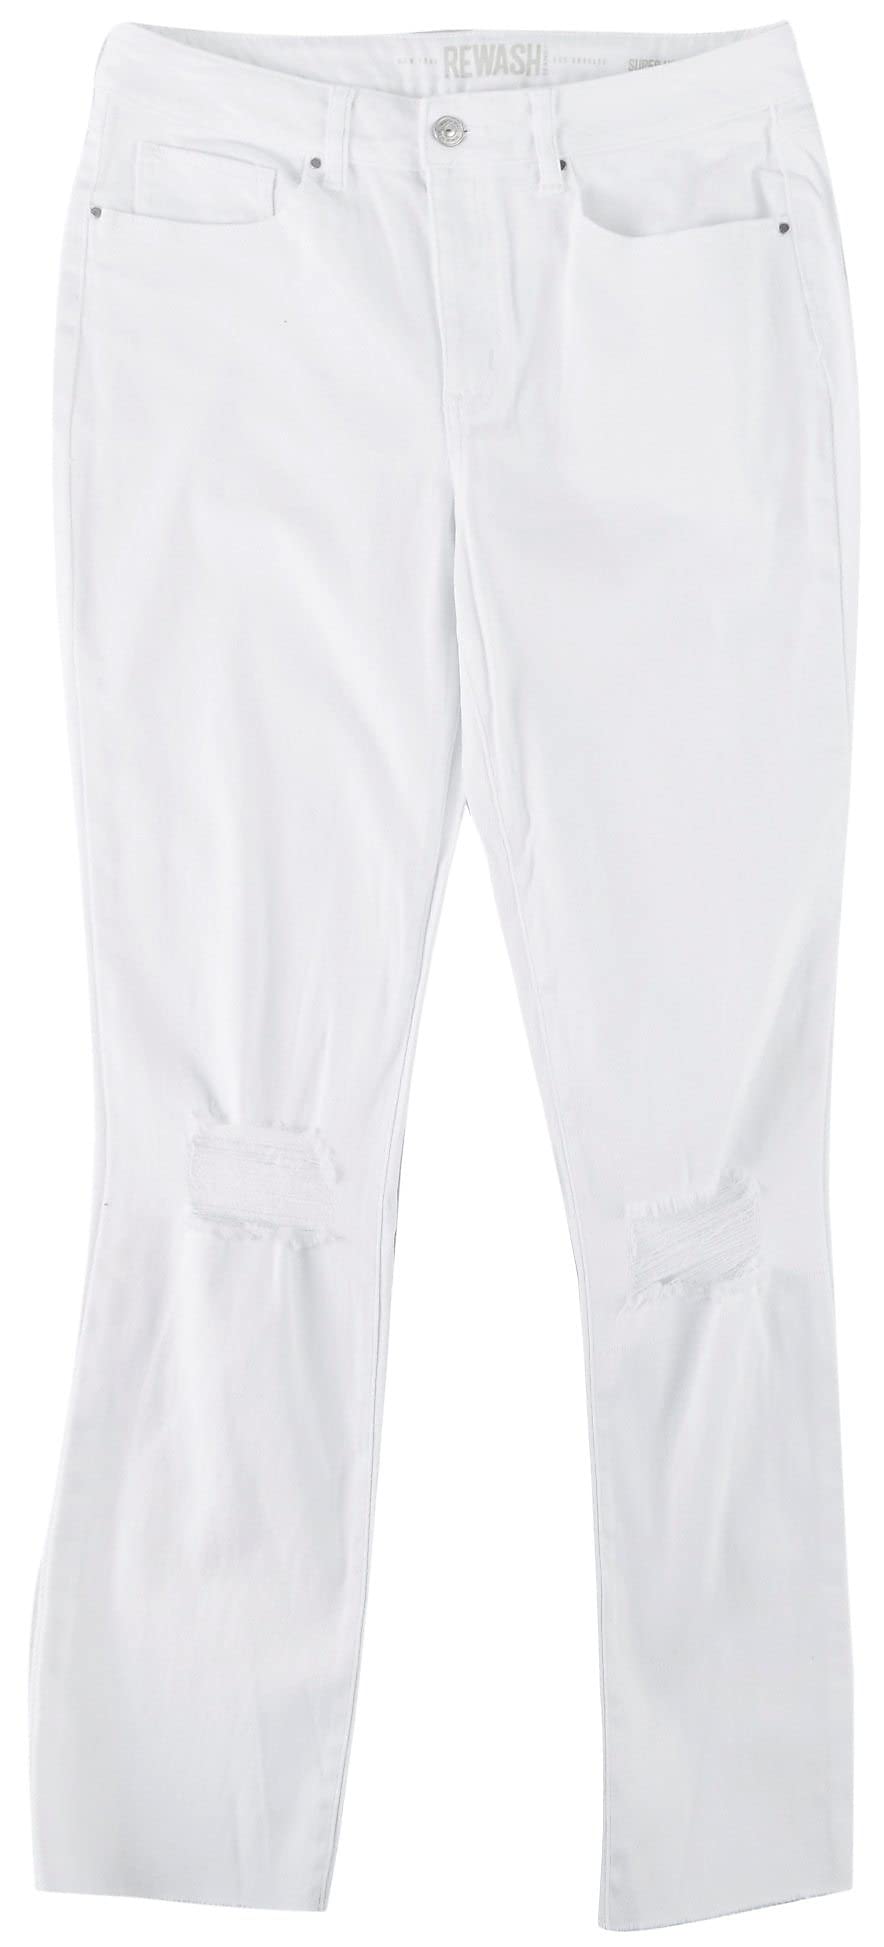 Rewash Juniors Super High Rise Shreded Knee Mom Jeans 11 White